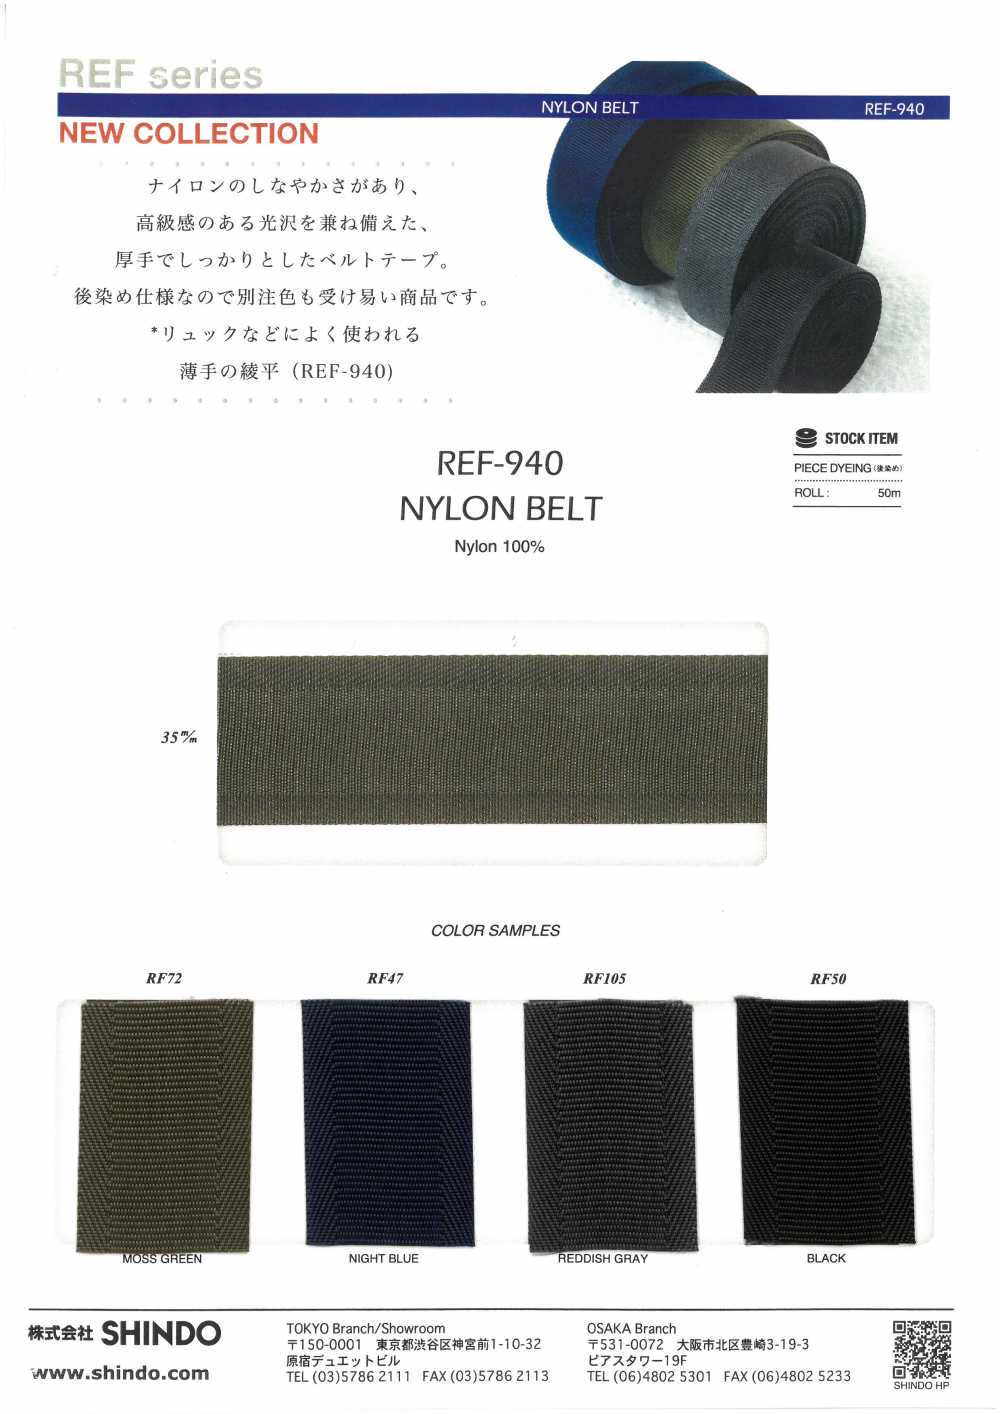 REF-940 Nylon Belt Twill Weave Flat[Ribbon Tape Cord] SHINDO(SIC)